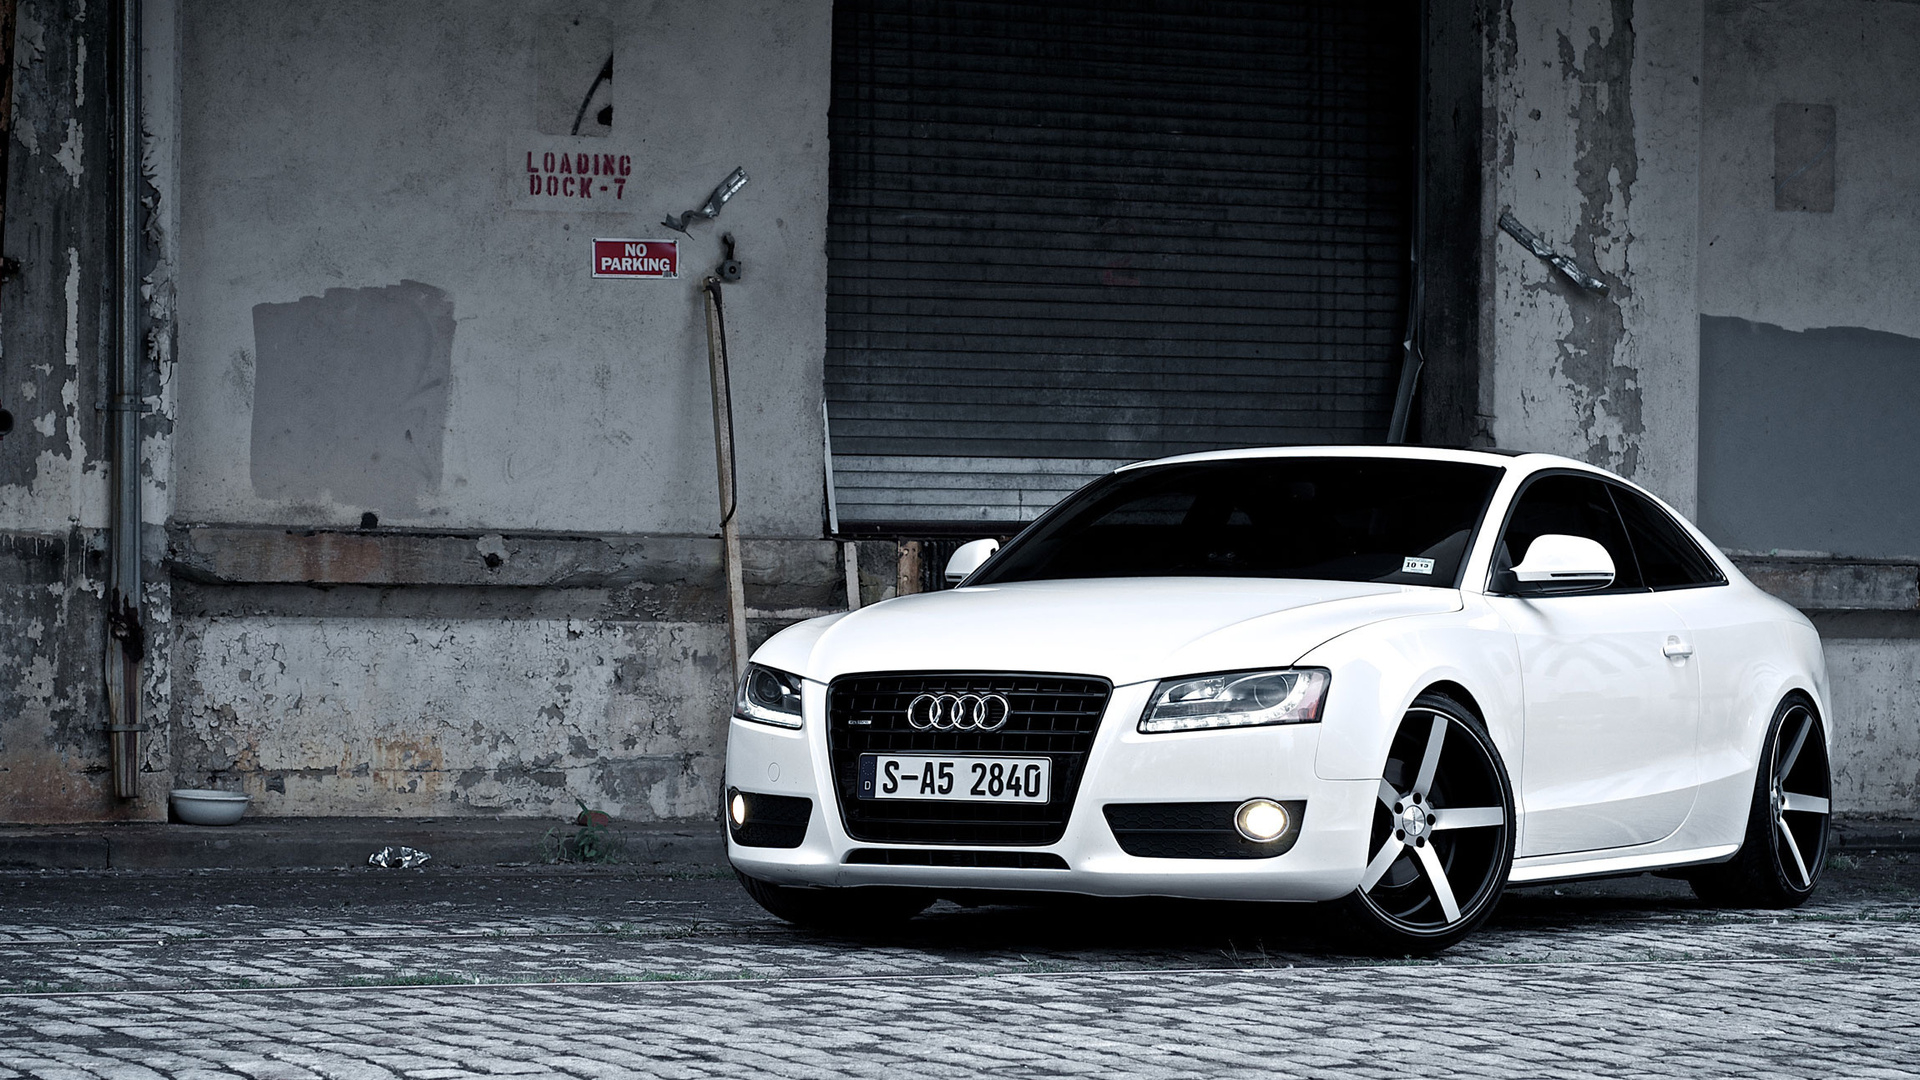 Audi A5 Tfsi HD Wallpaper Background